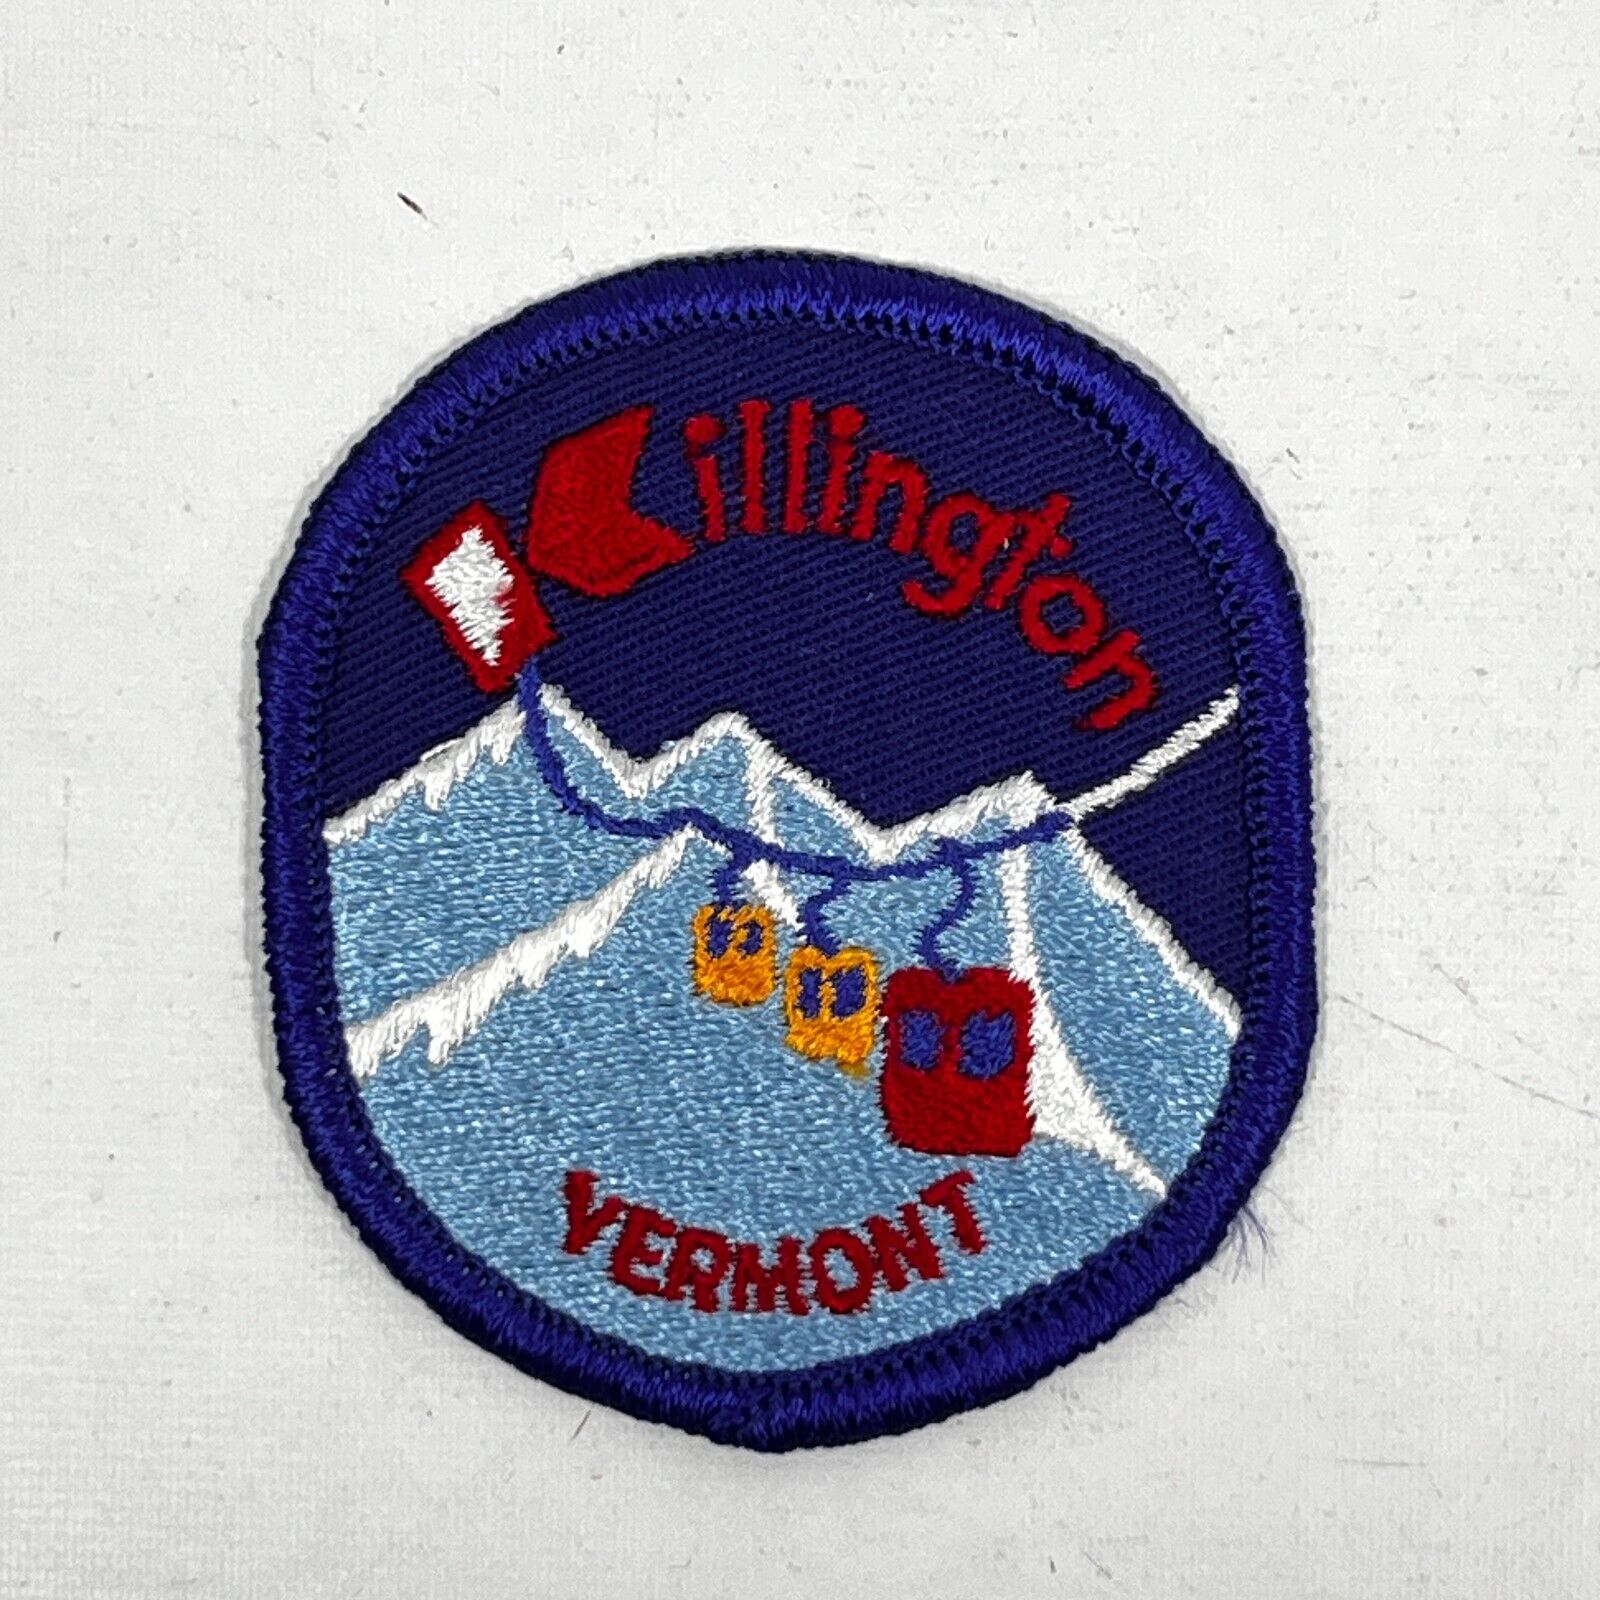 KILLINGTON patch VERMONT RESORT Ski Lift Beast Of The East Snowboarding